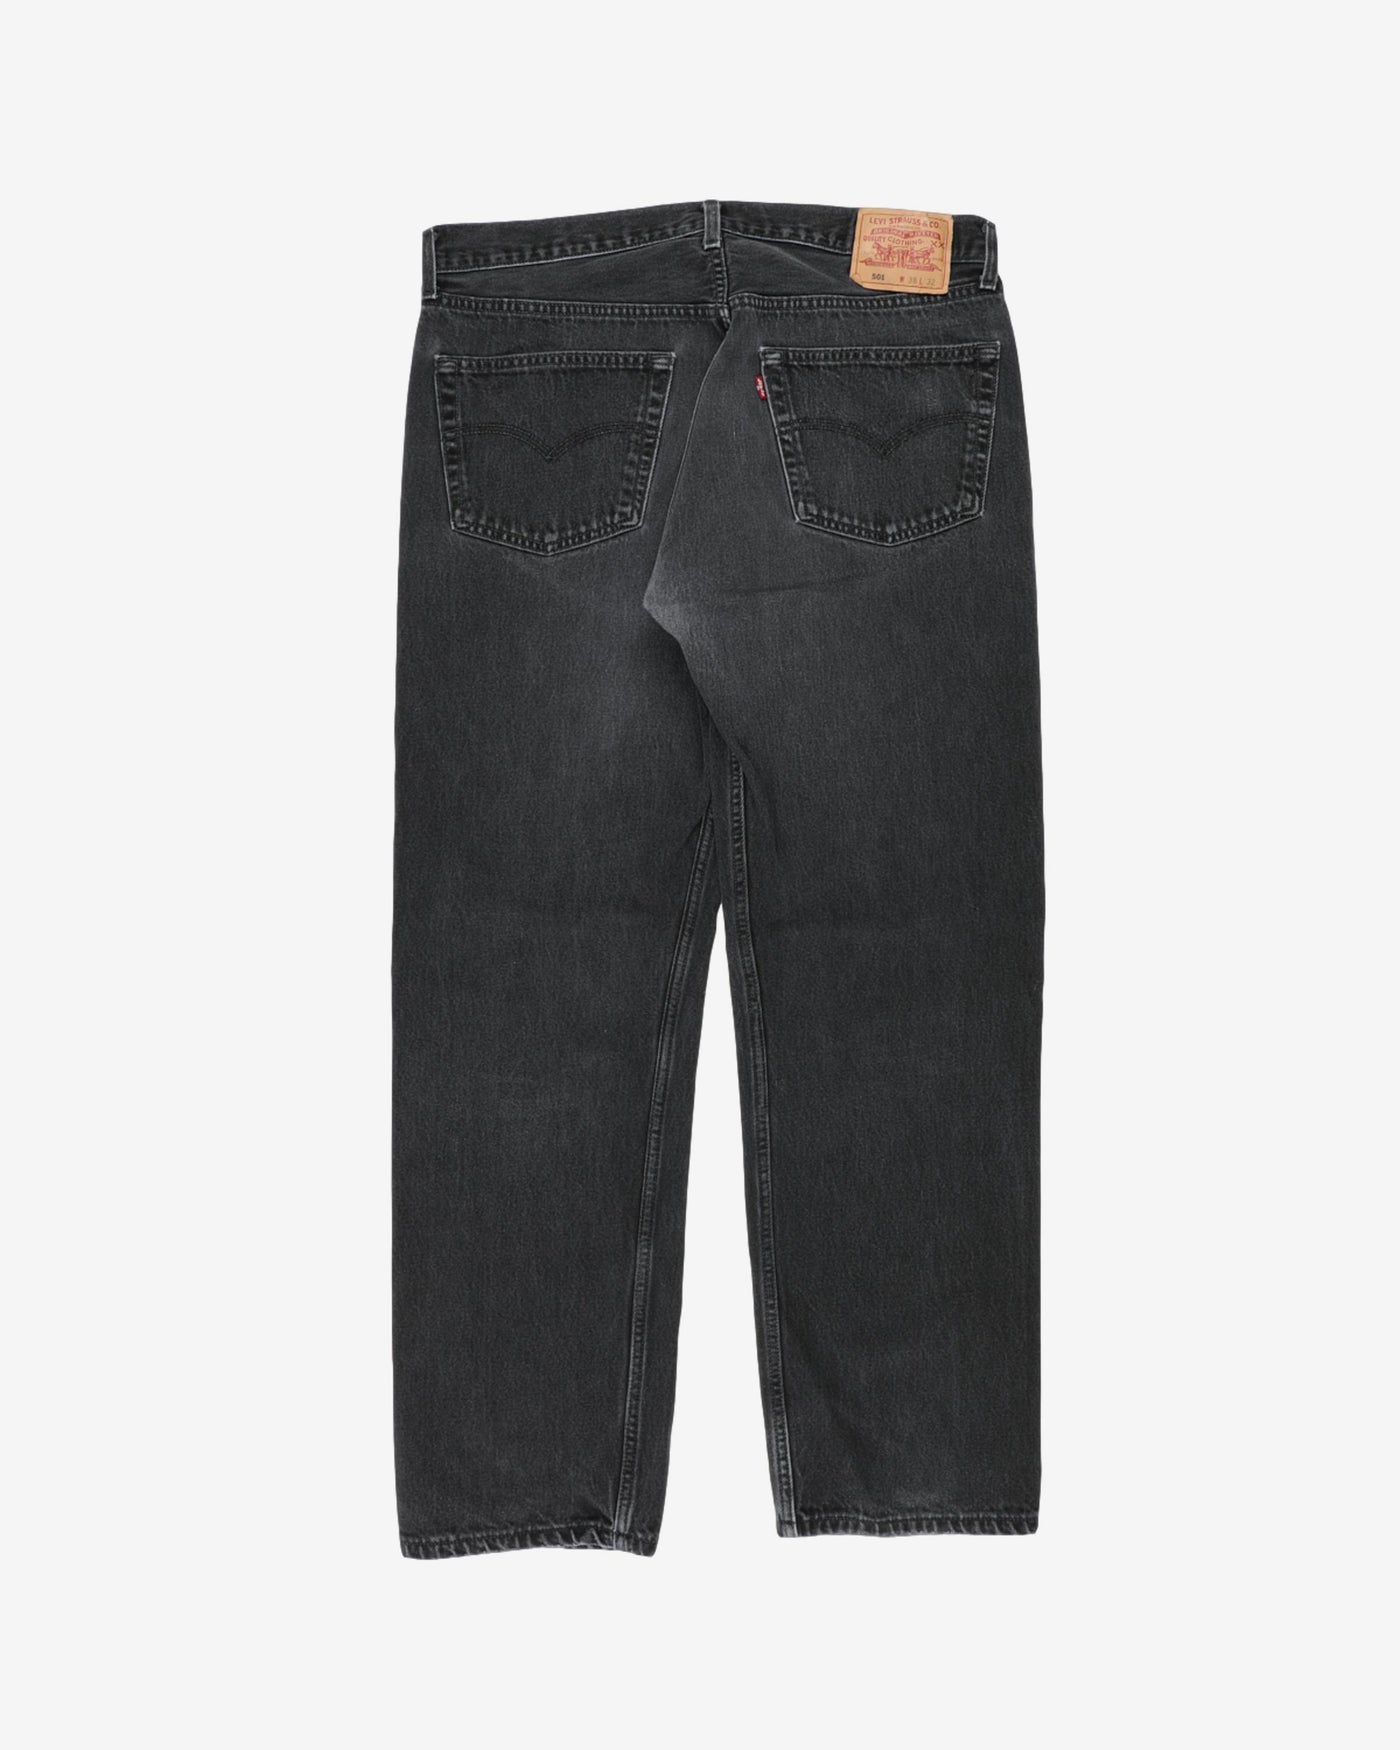 Vintage Levi's Jeans 501Dark Charcoal Denim - W38 L30